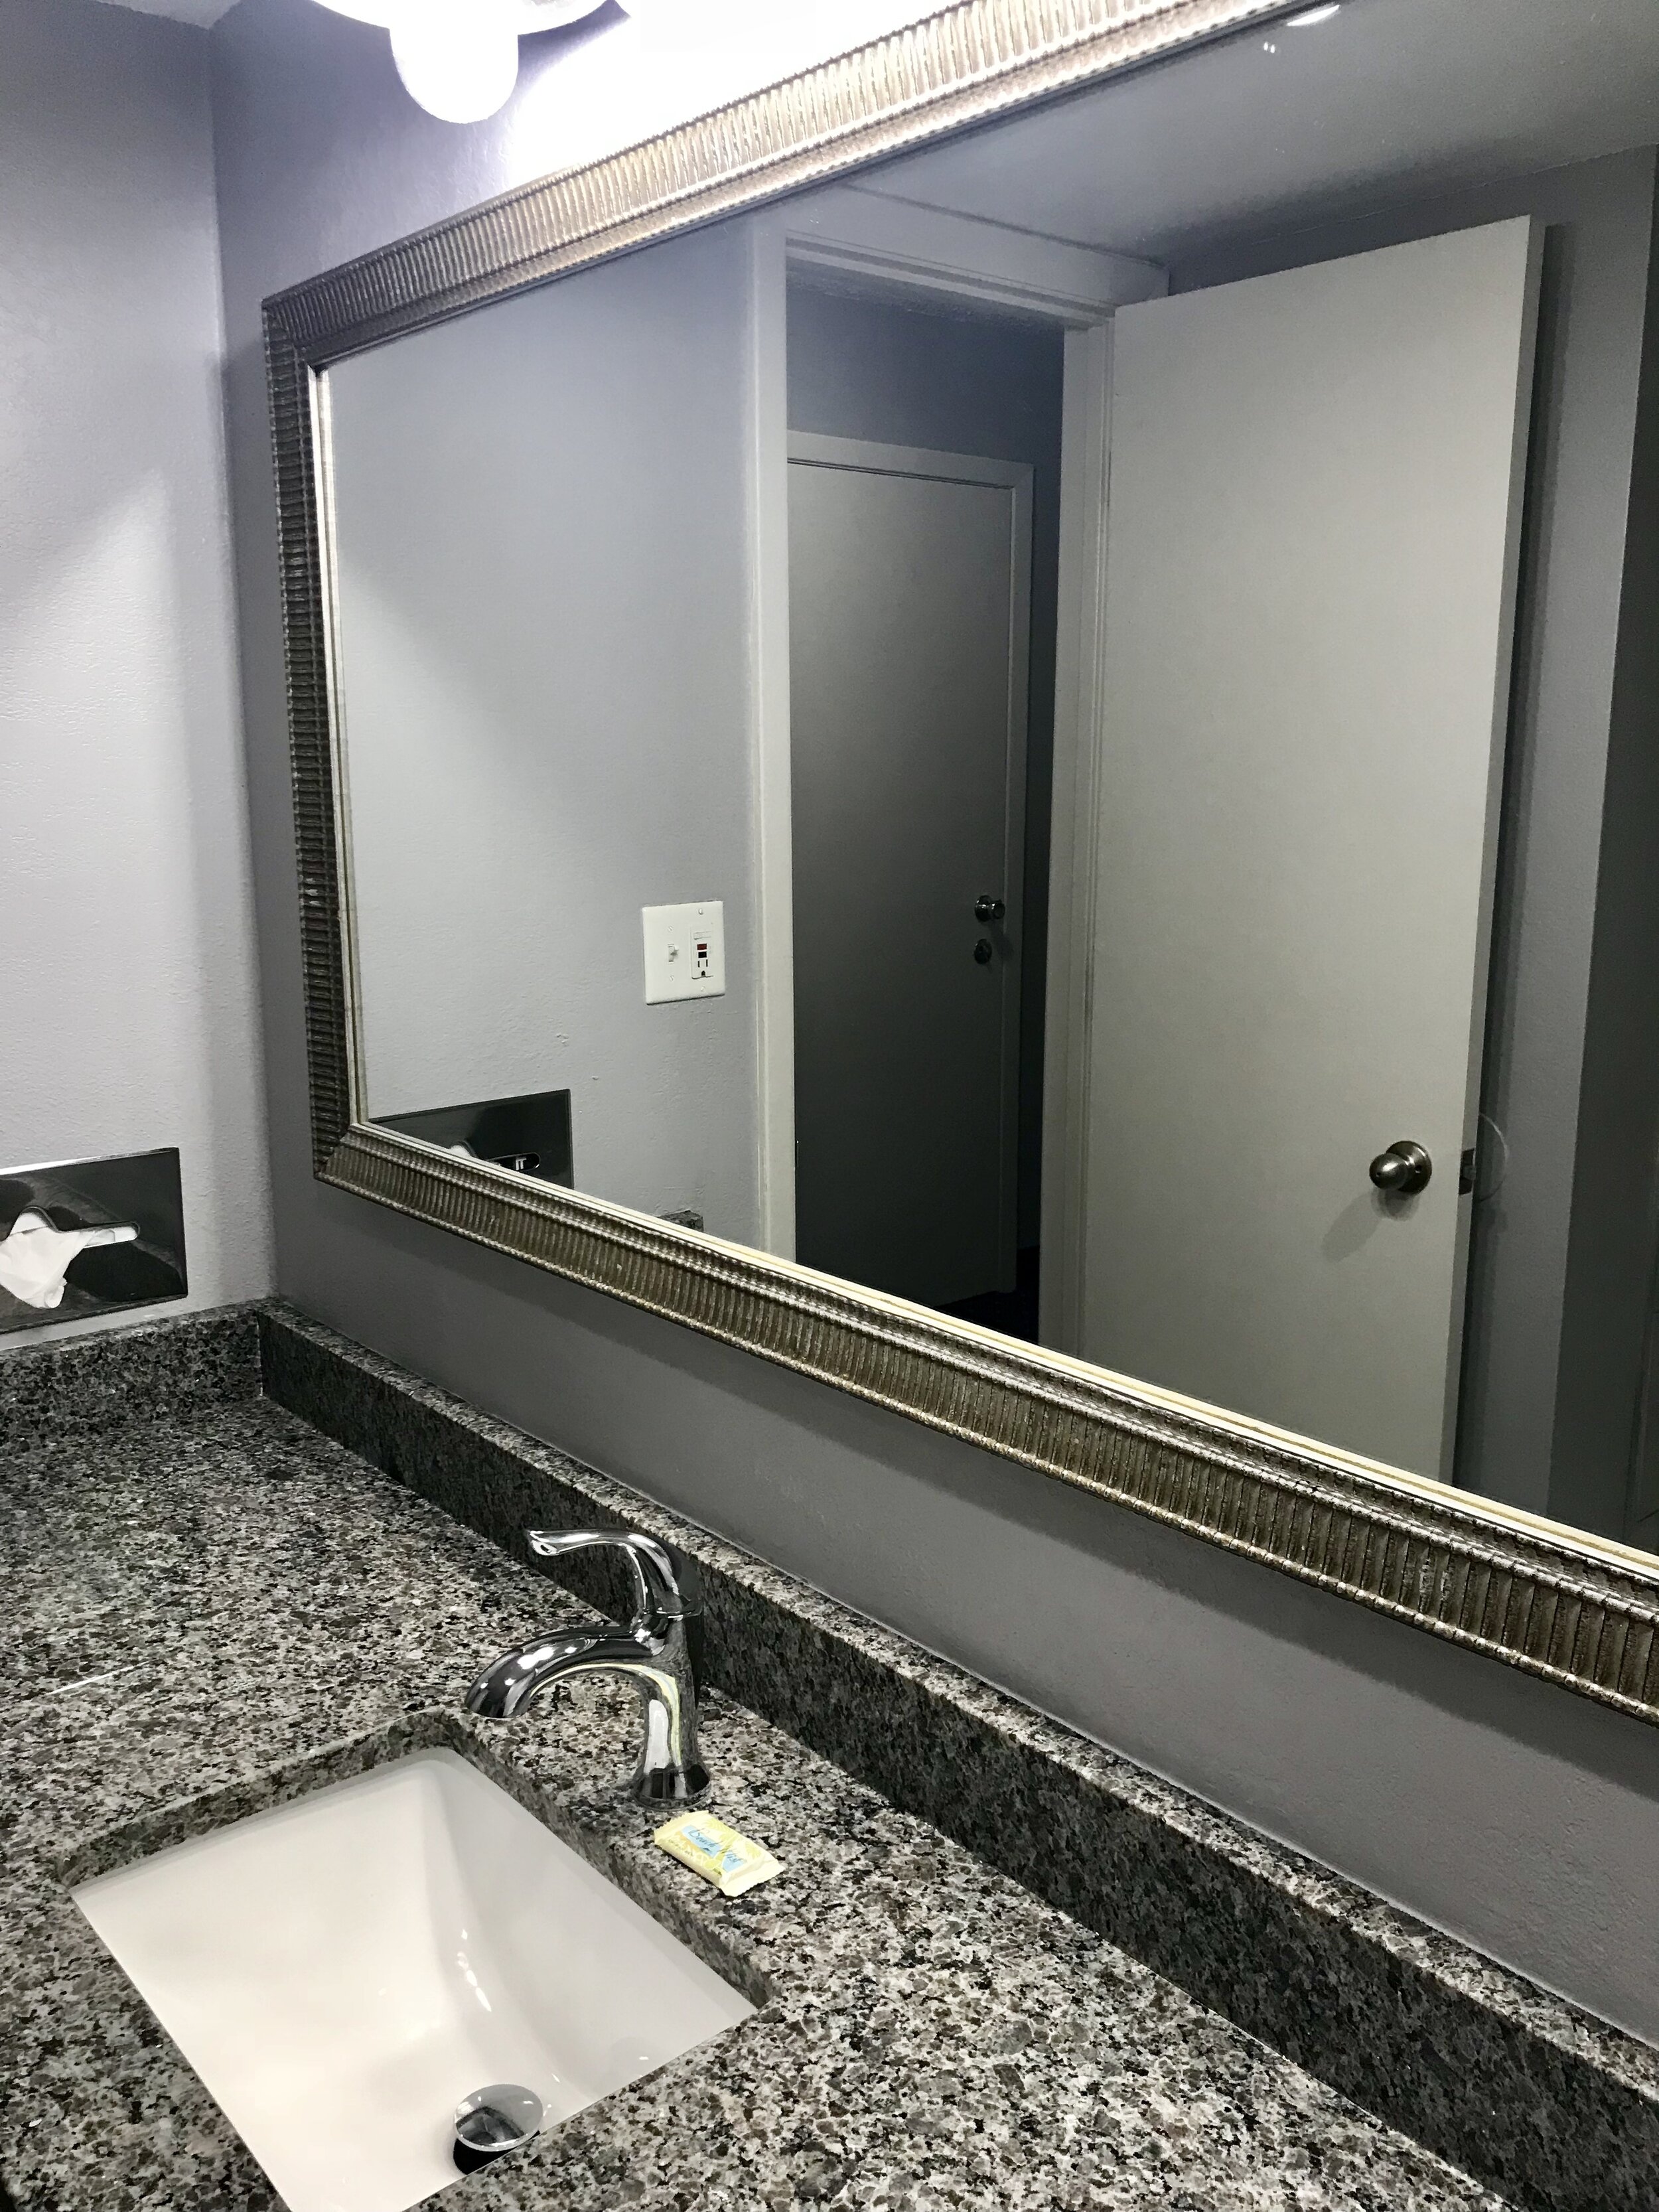 06-29-18 new bathroom design .jpg